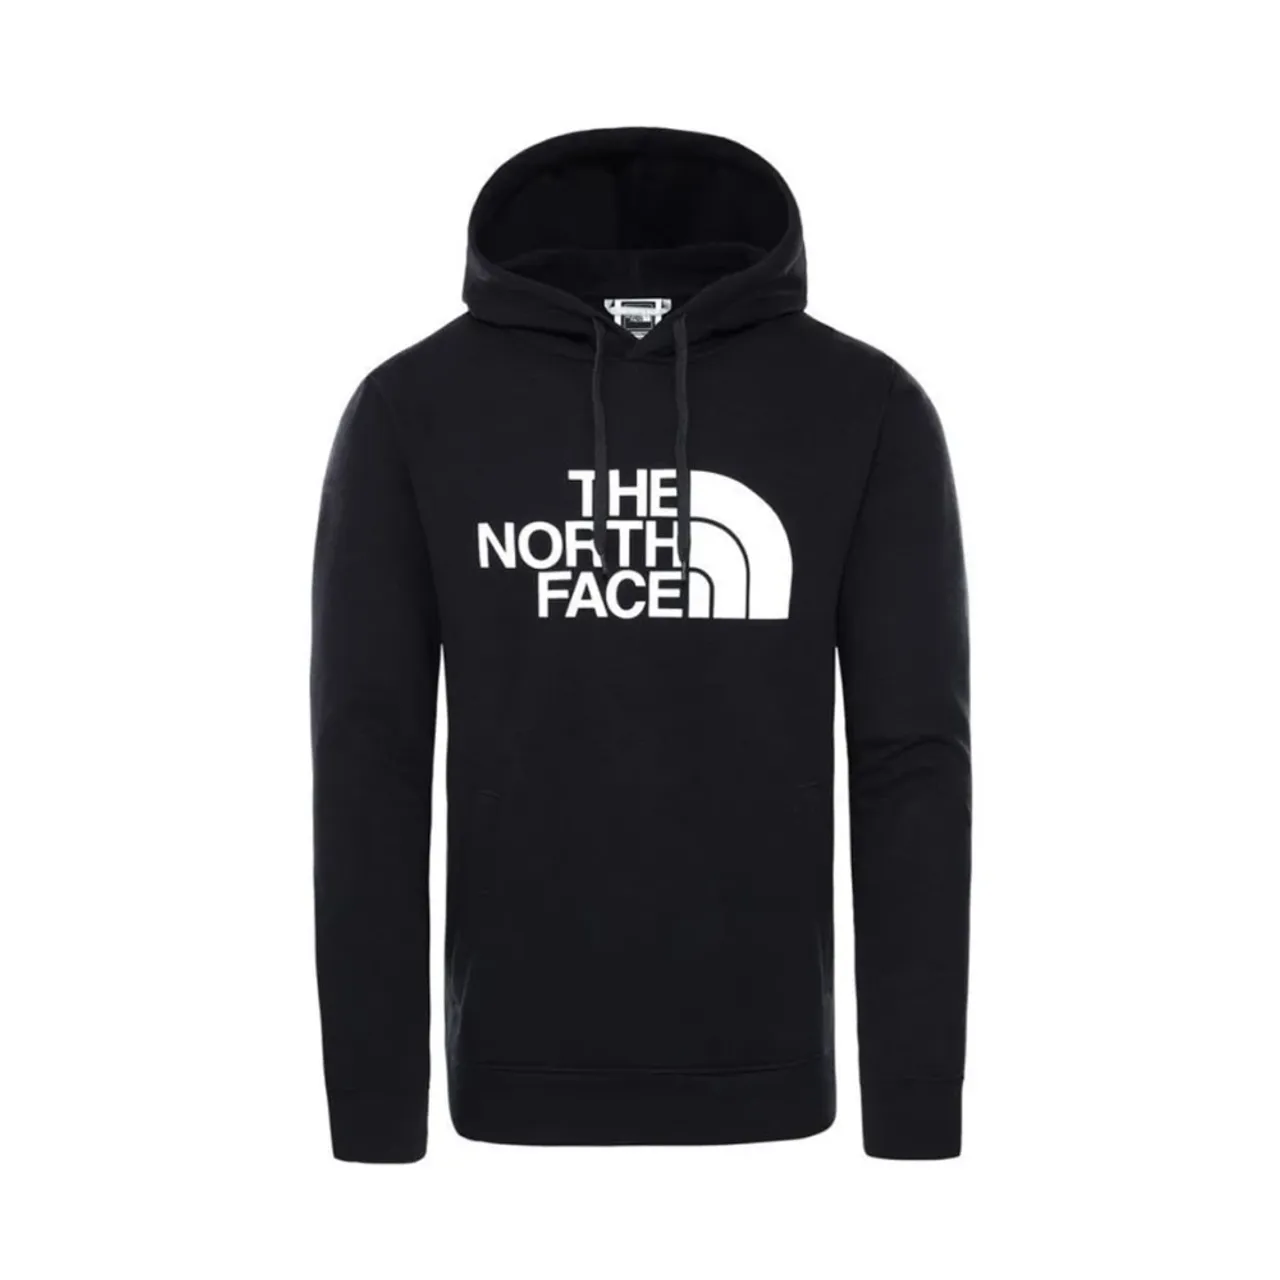 The North Face - Sweatshirts & Hoodies 